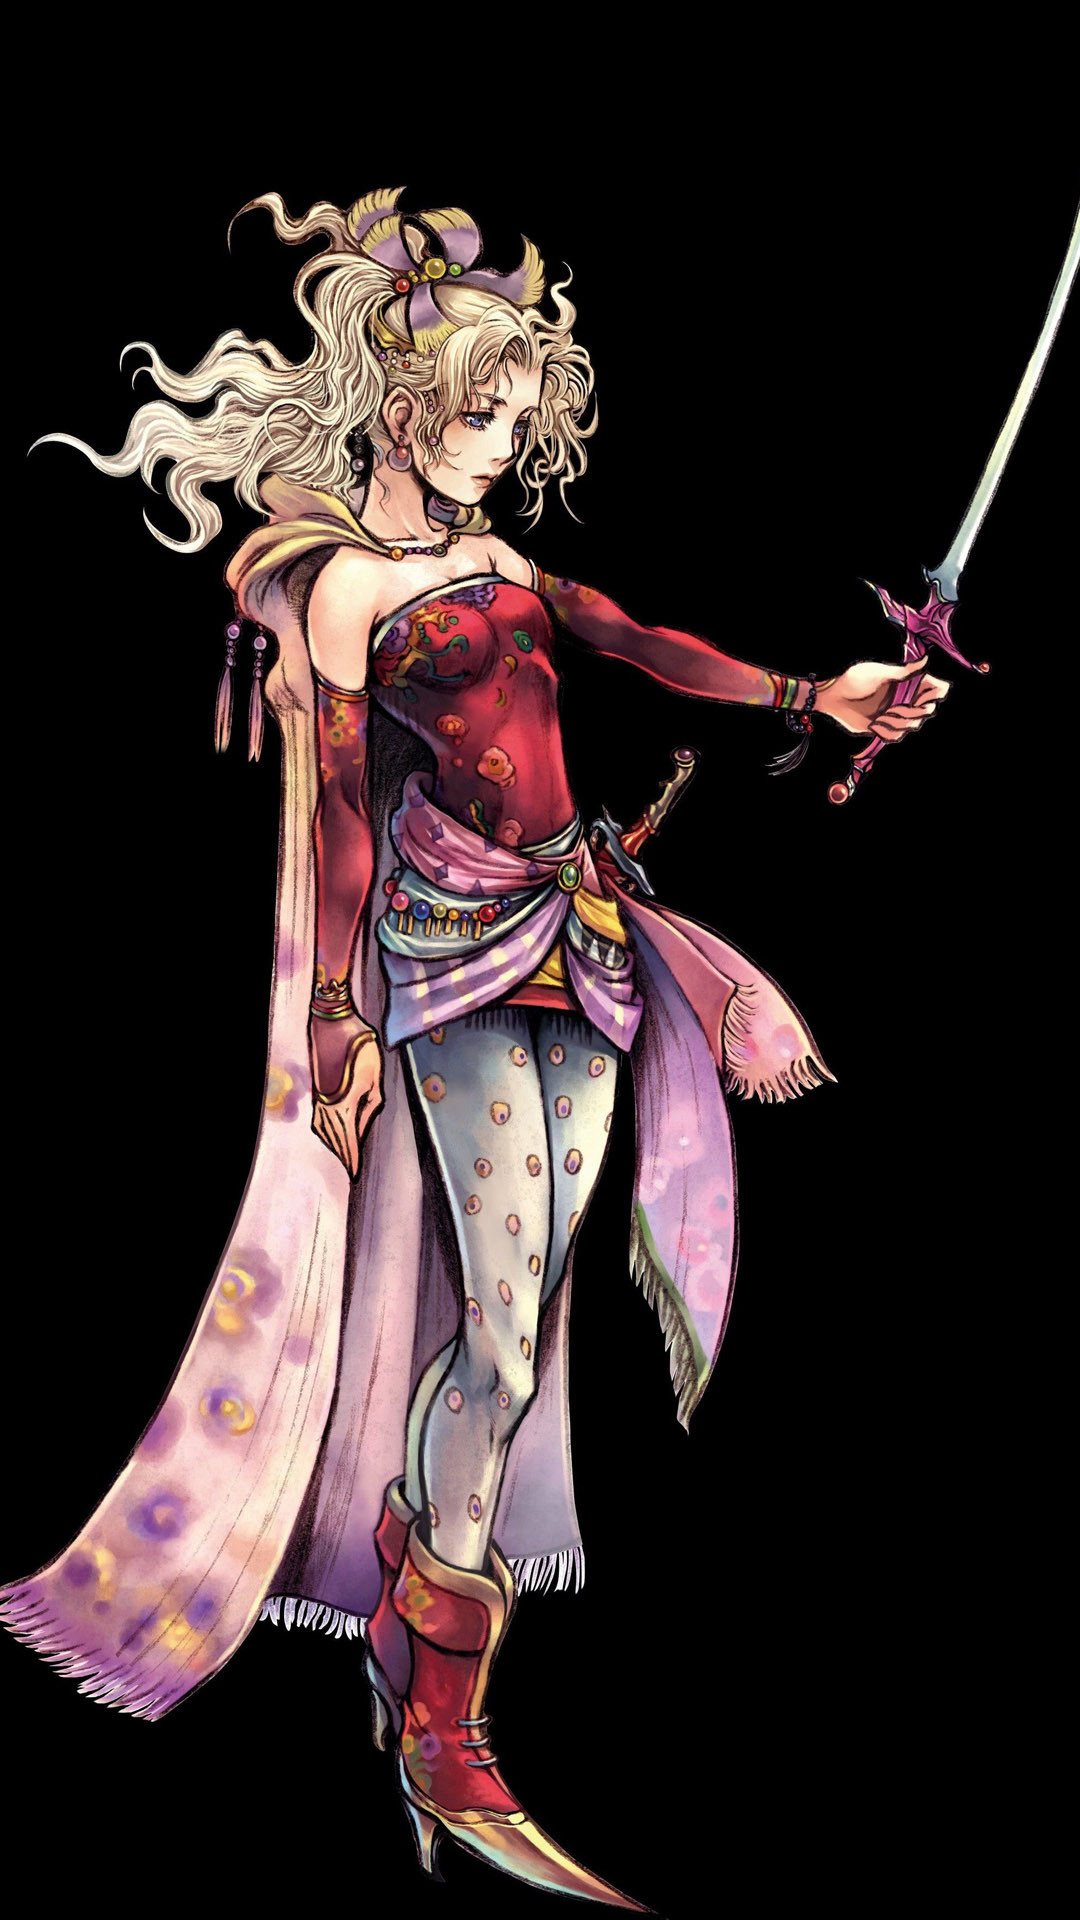 Terra Branford – Final Fantasy VI Game mobile wallpaper